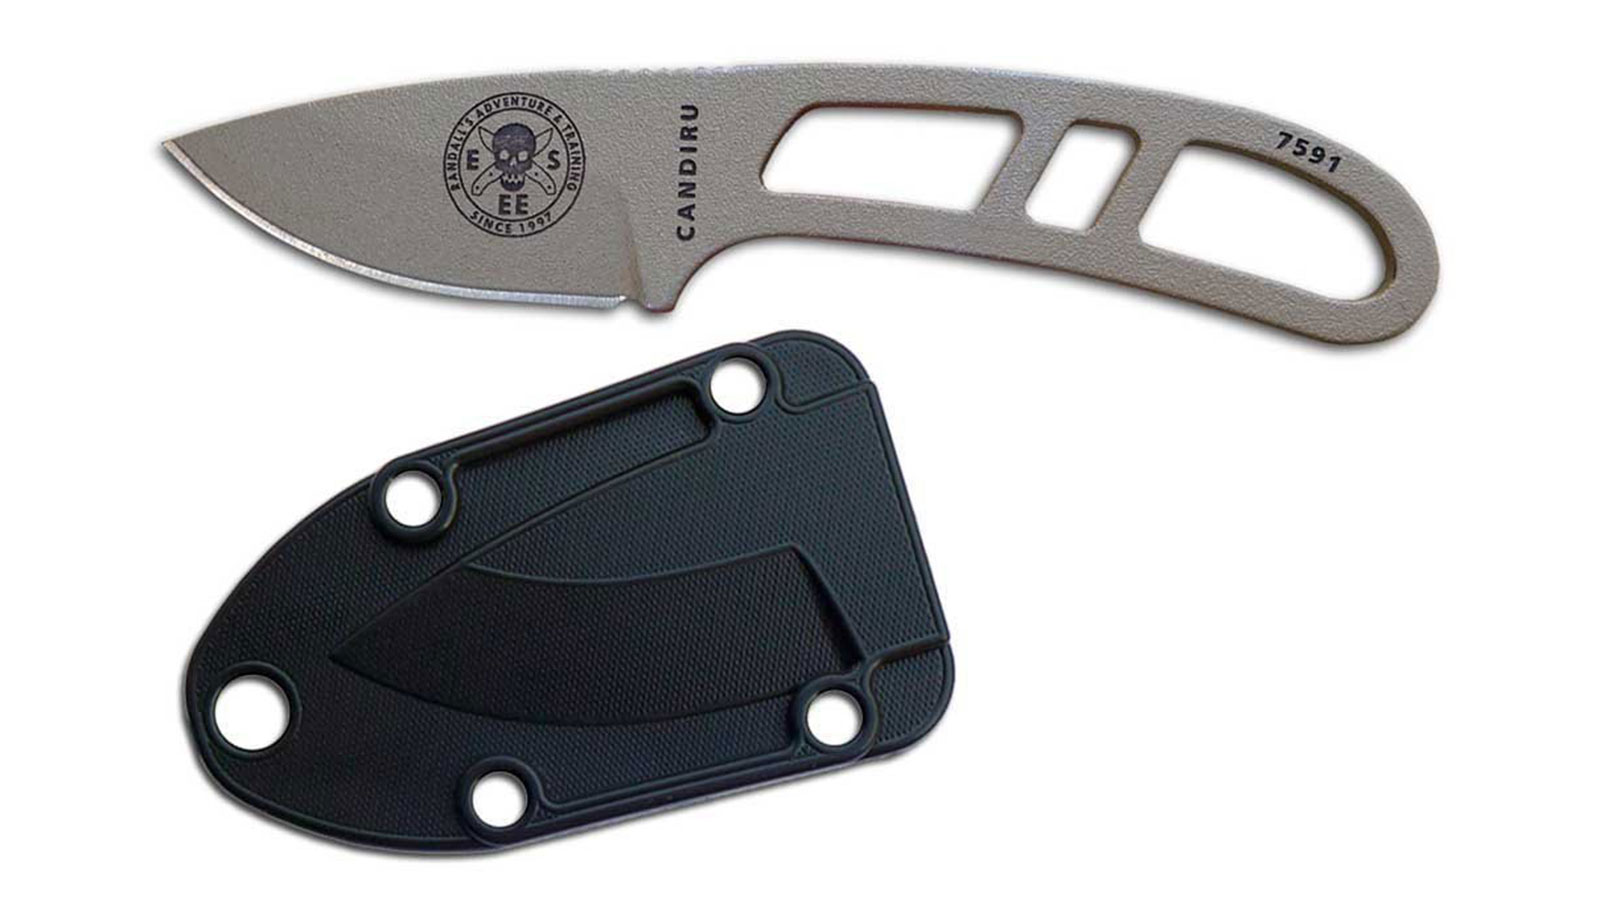 ESEE Candiru Mini Neck Knife | best neck knives